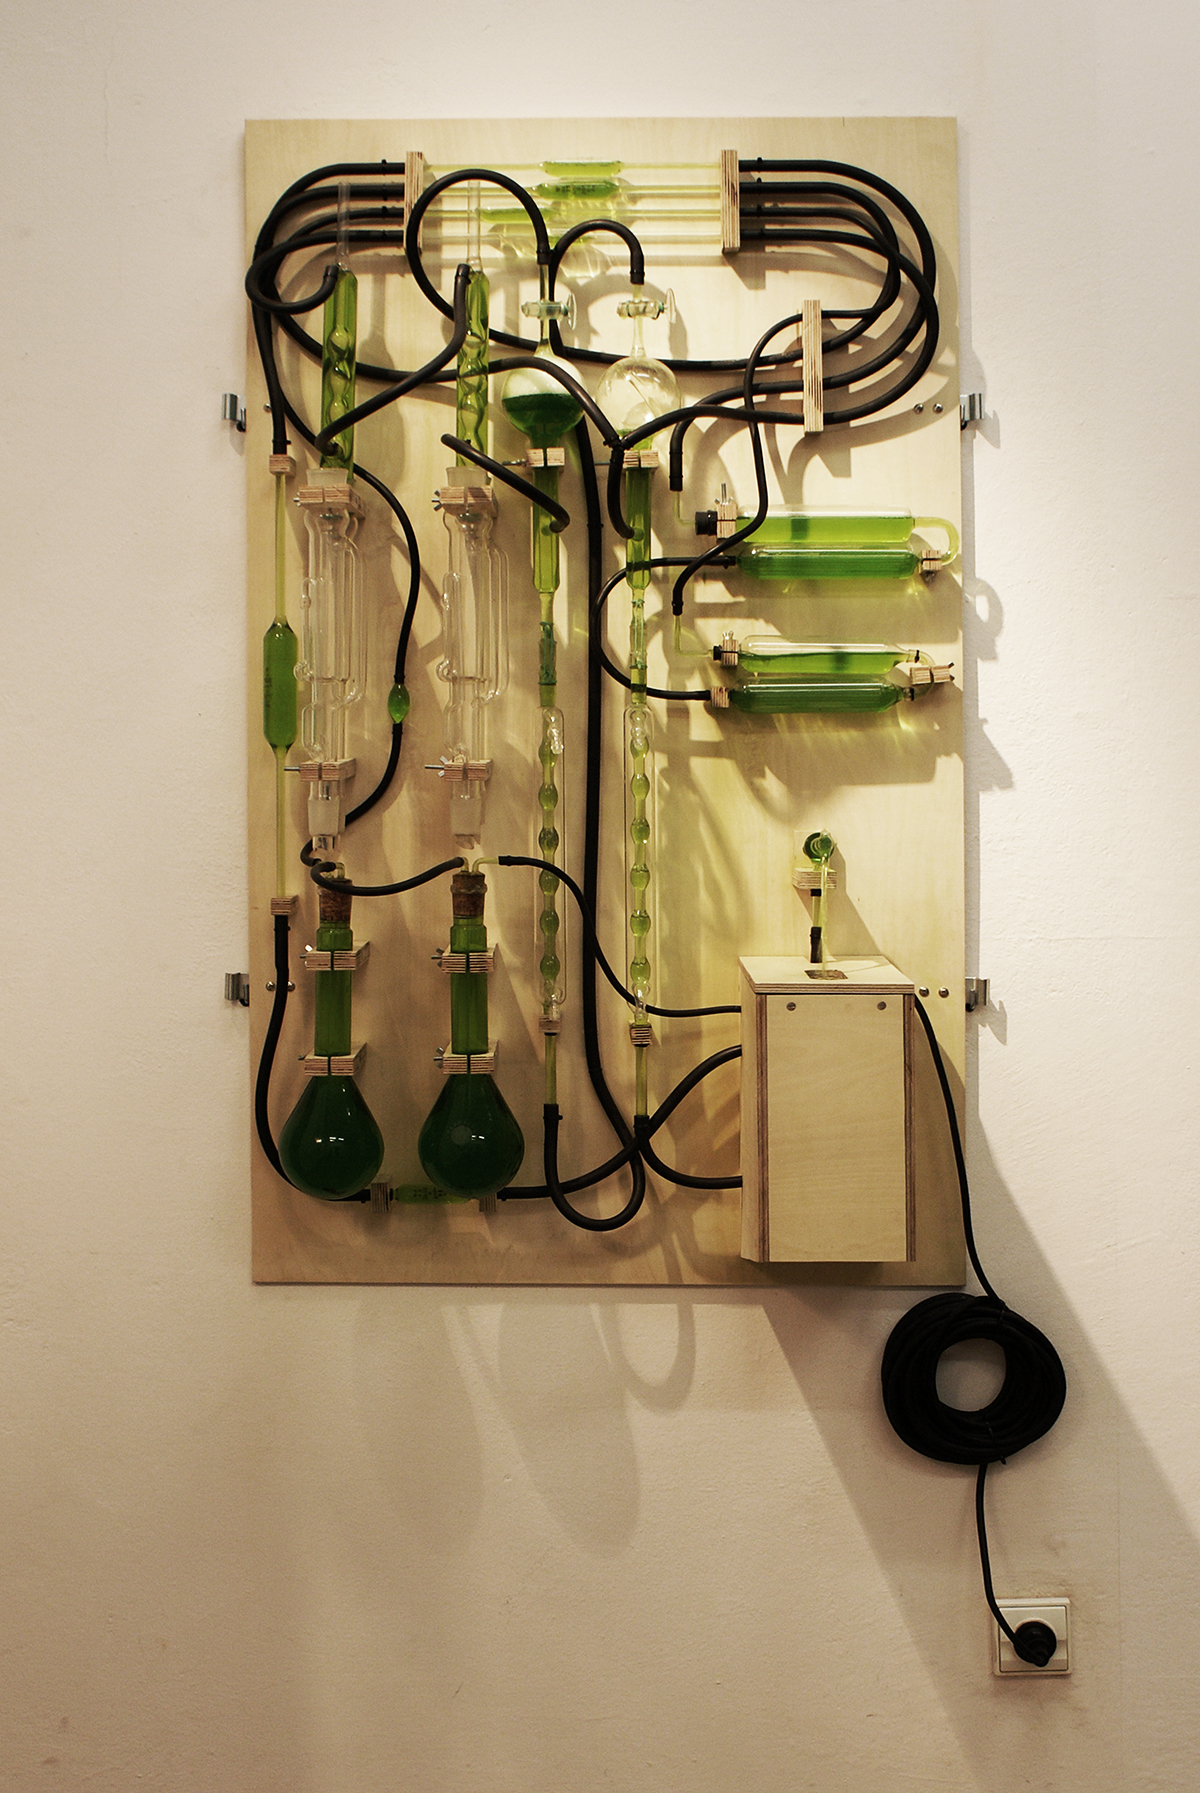 Aleksandra Ola Kubiak, "Radon Machine", 2013, obiekt